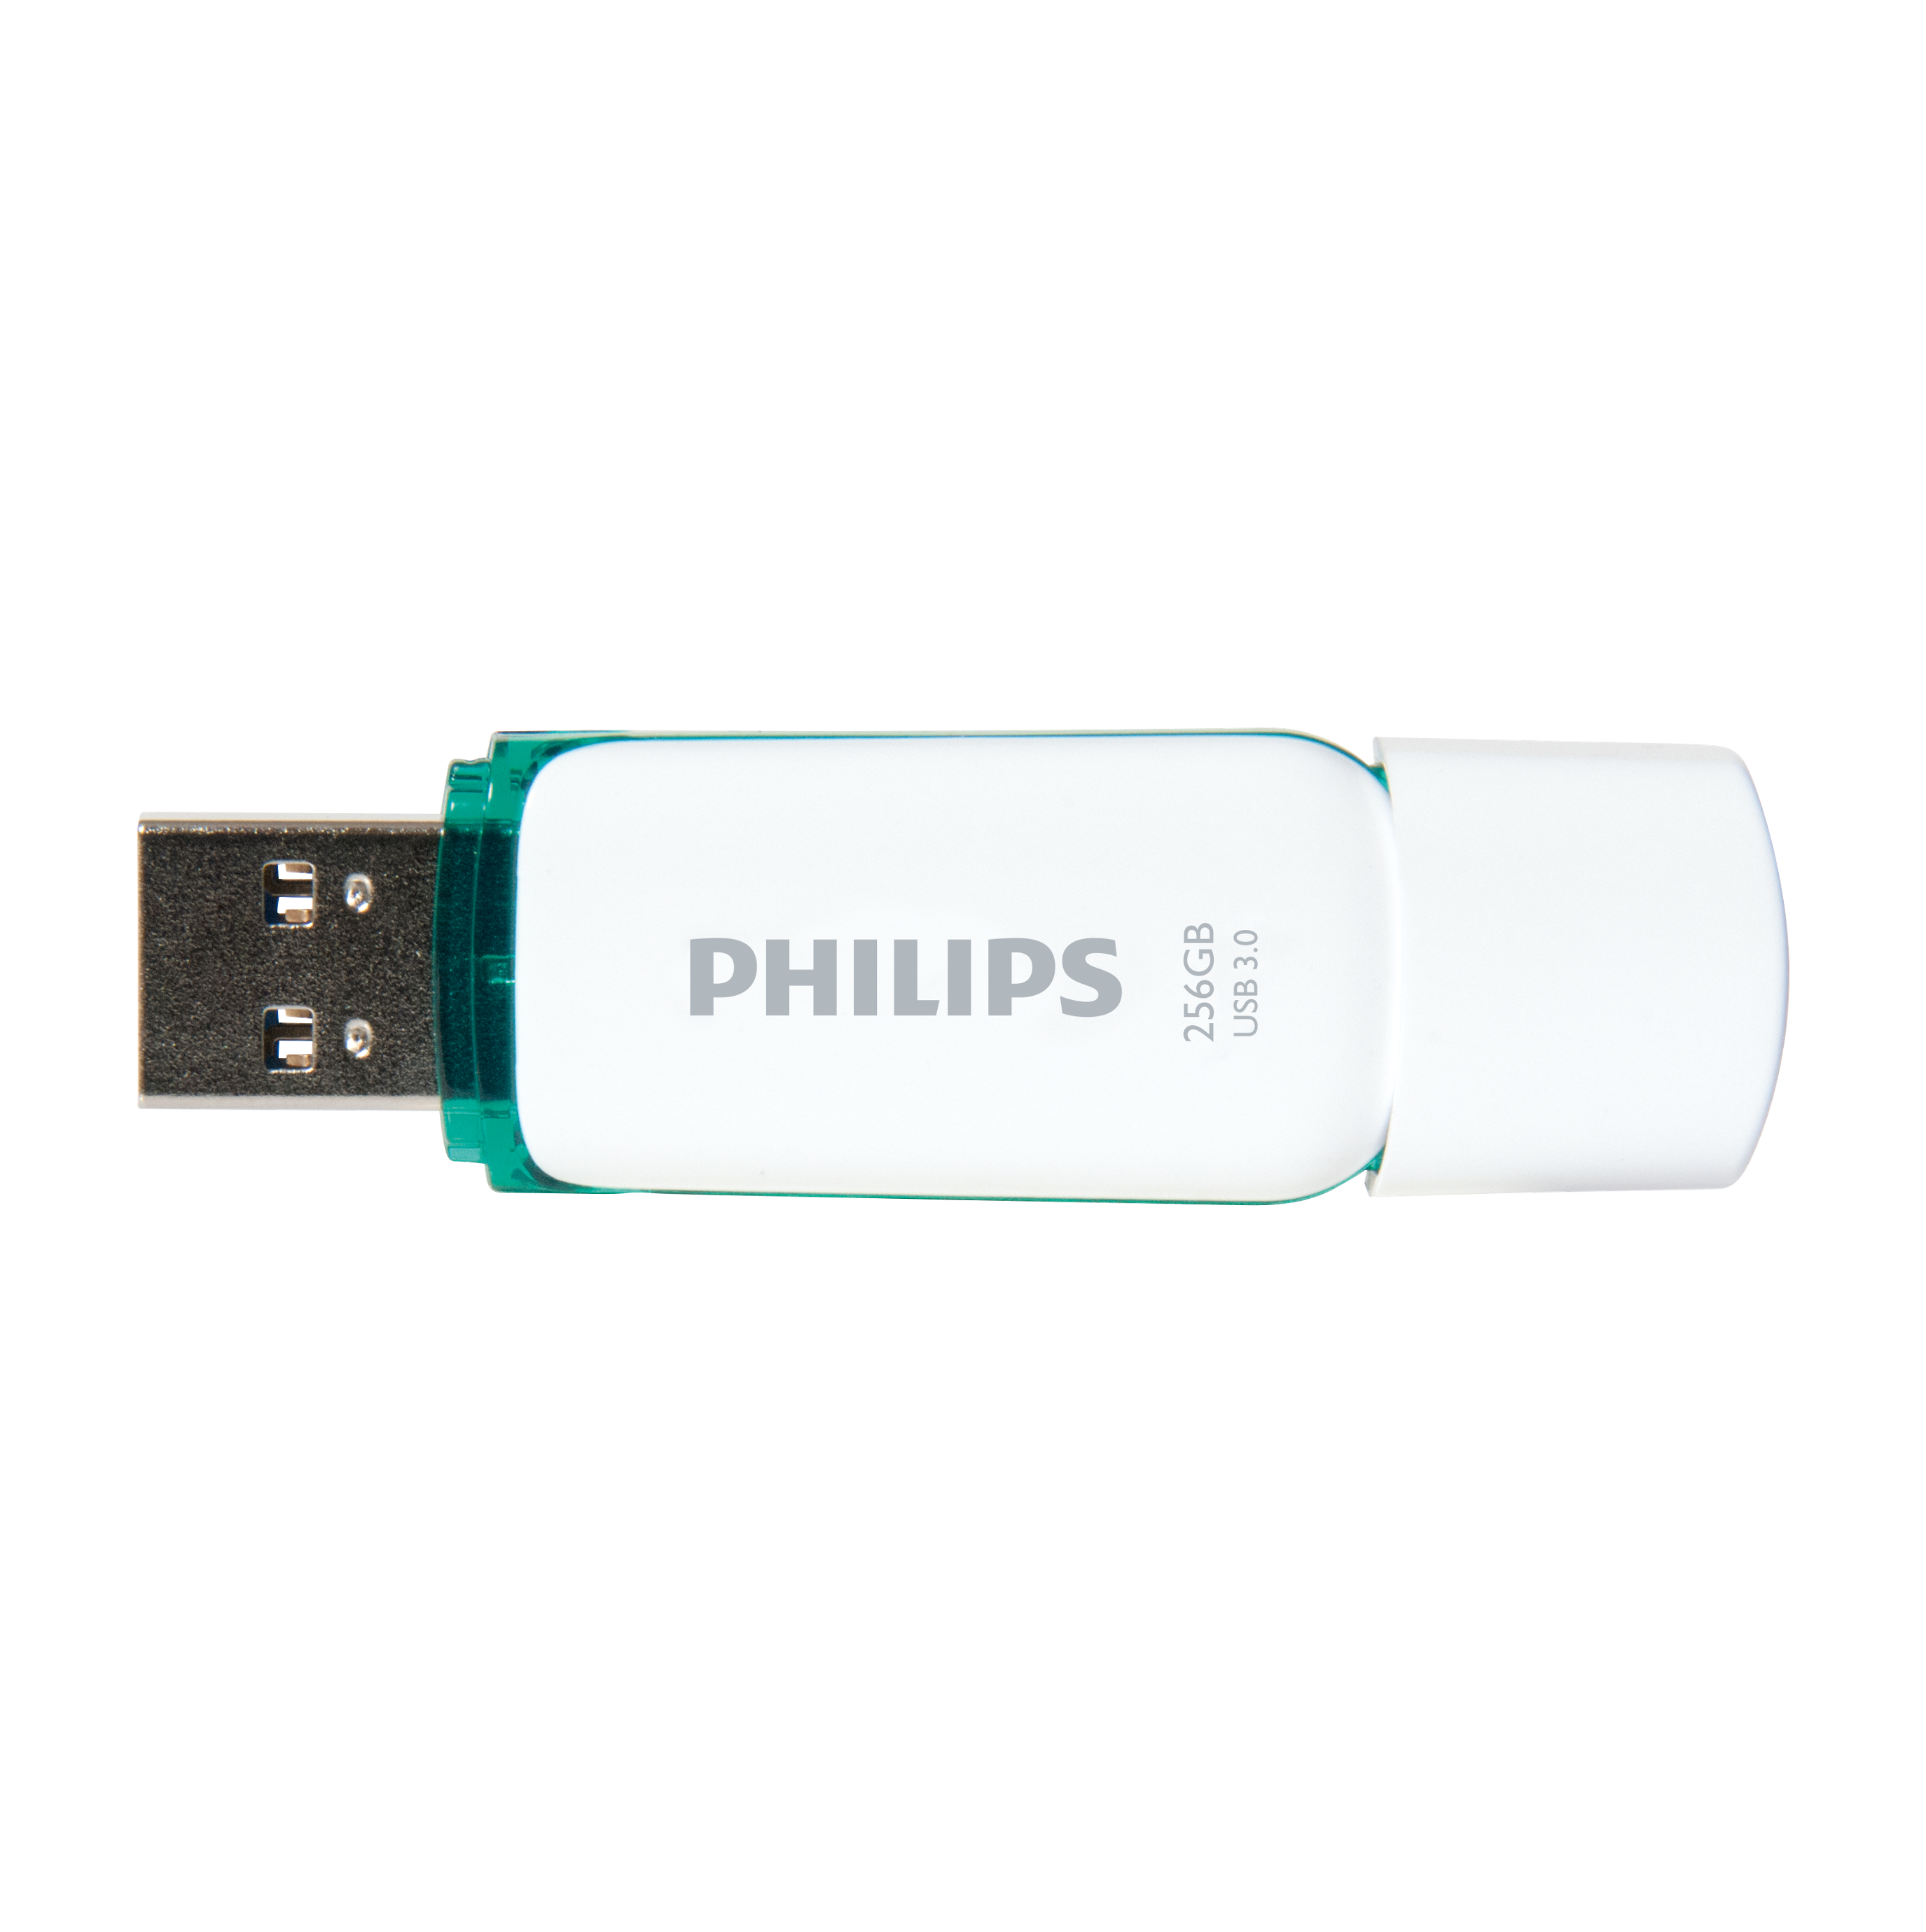 Green®, GB) (Weiß, MB/s Snow 256 PHILIPS 100 Spring USB-Stick Edition